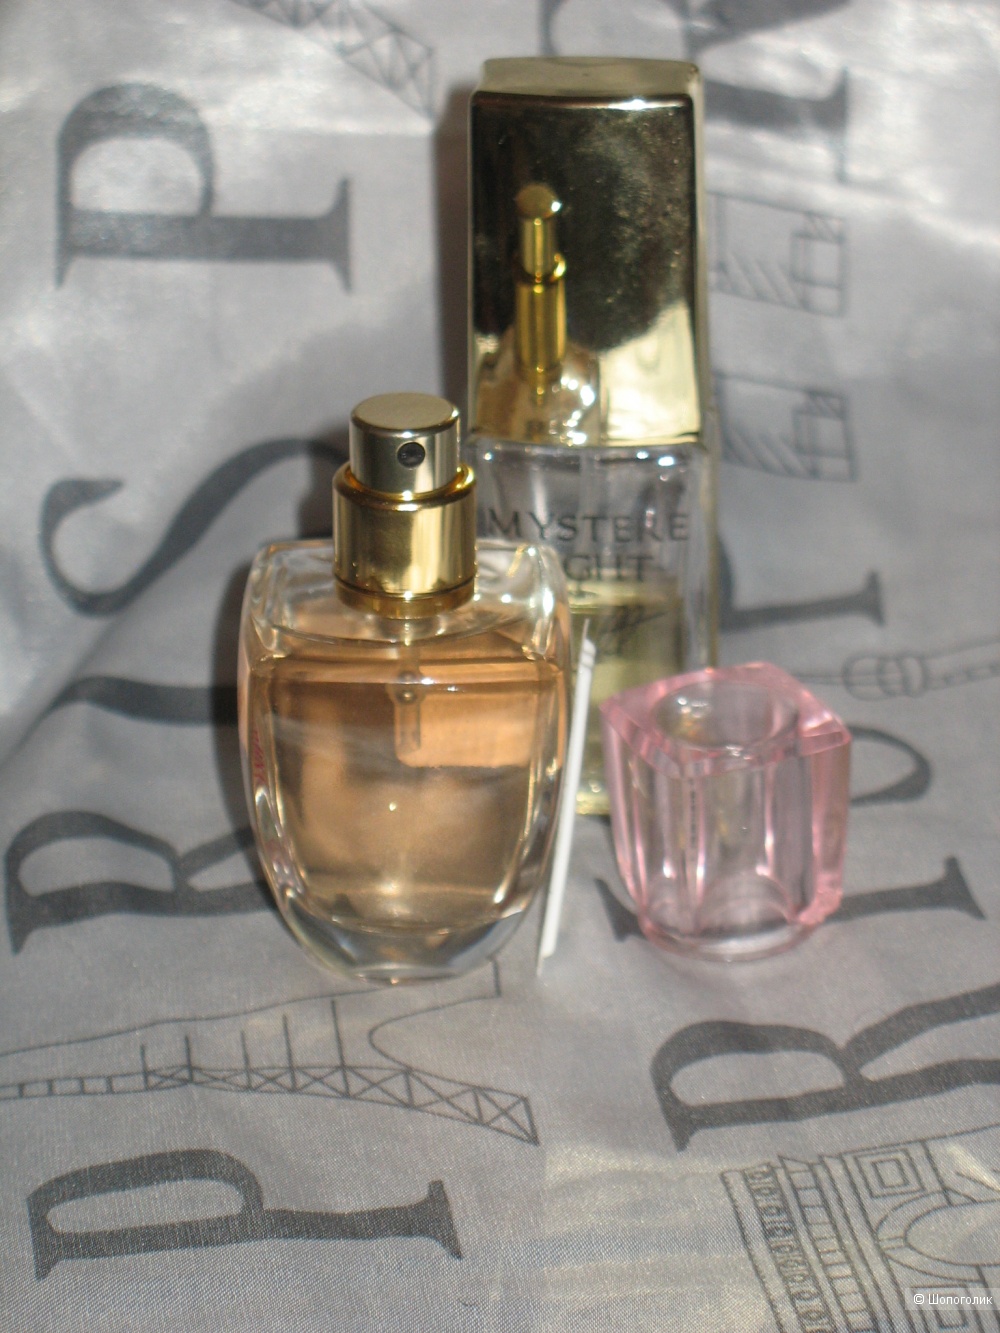 Лот парфюмерии: Essence Pure Limited Edition S.T. Dupont +Mystere Light